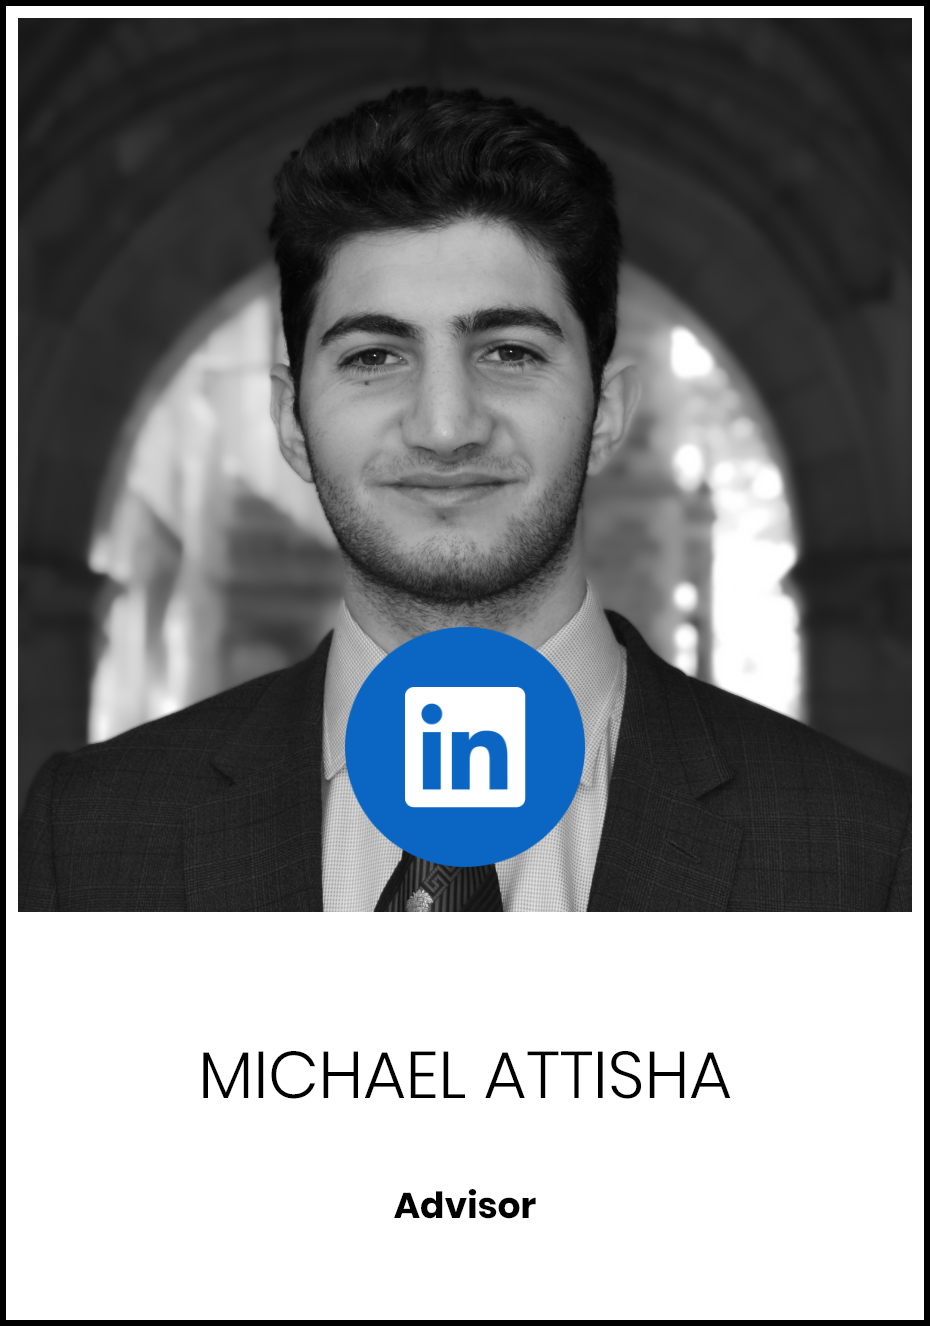 Michael Attisha